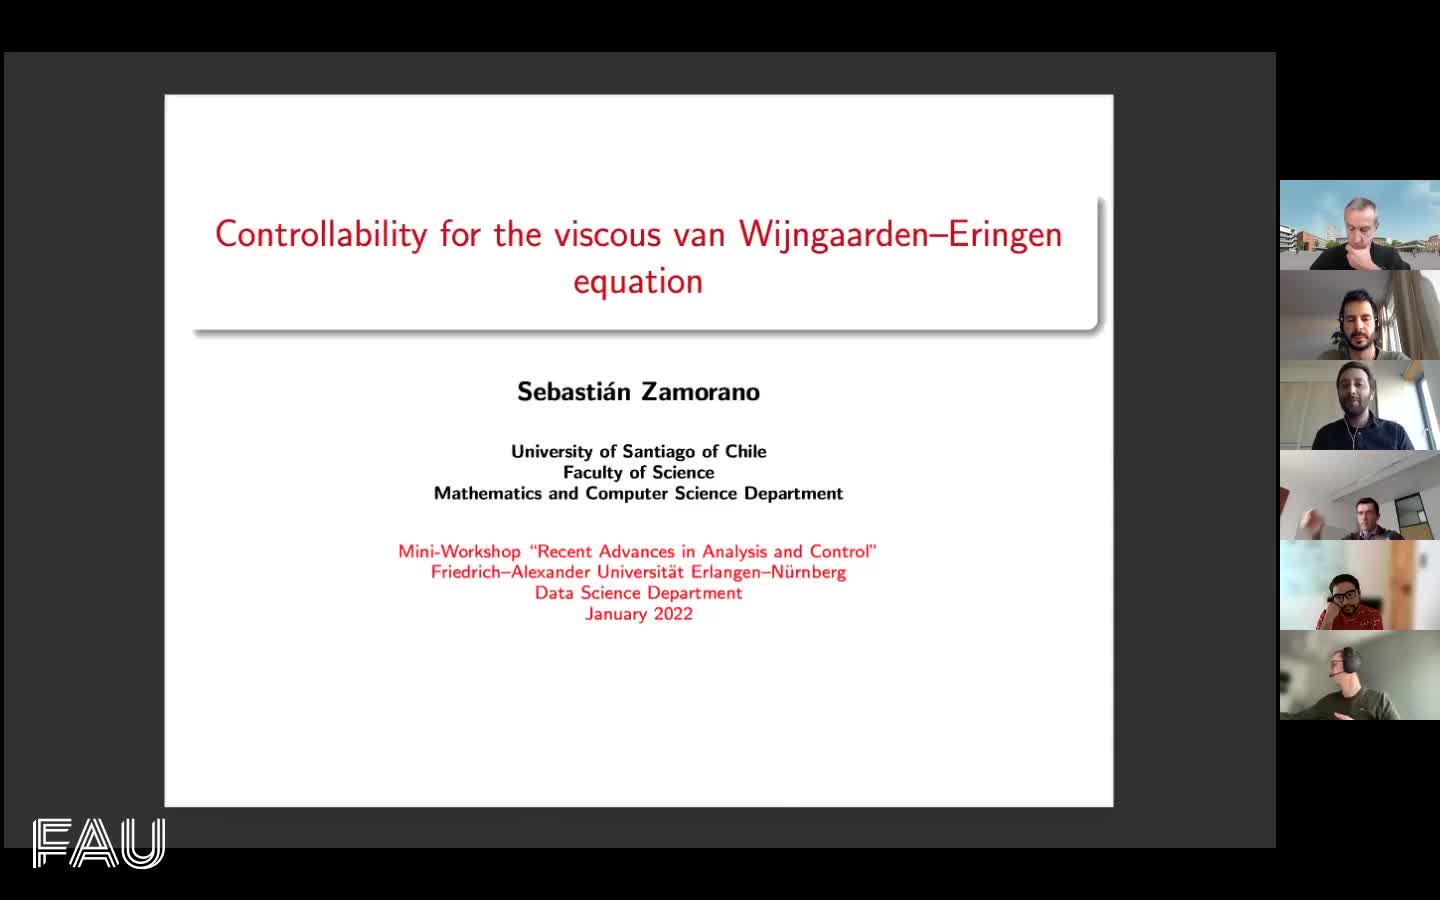 Controllability for the viscous van Wijngaarden-Eringen equation (S. Zamorano Aliaga, U of Santiago of Chile) preview image